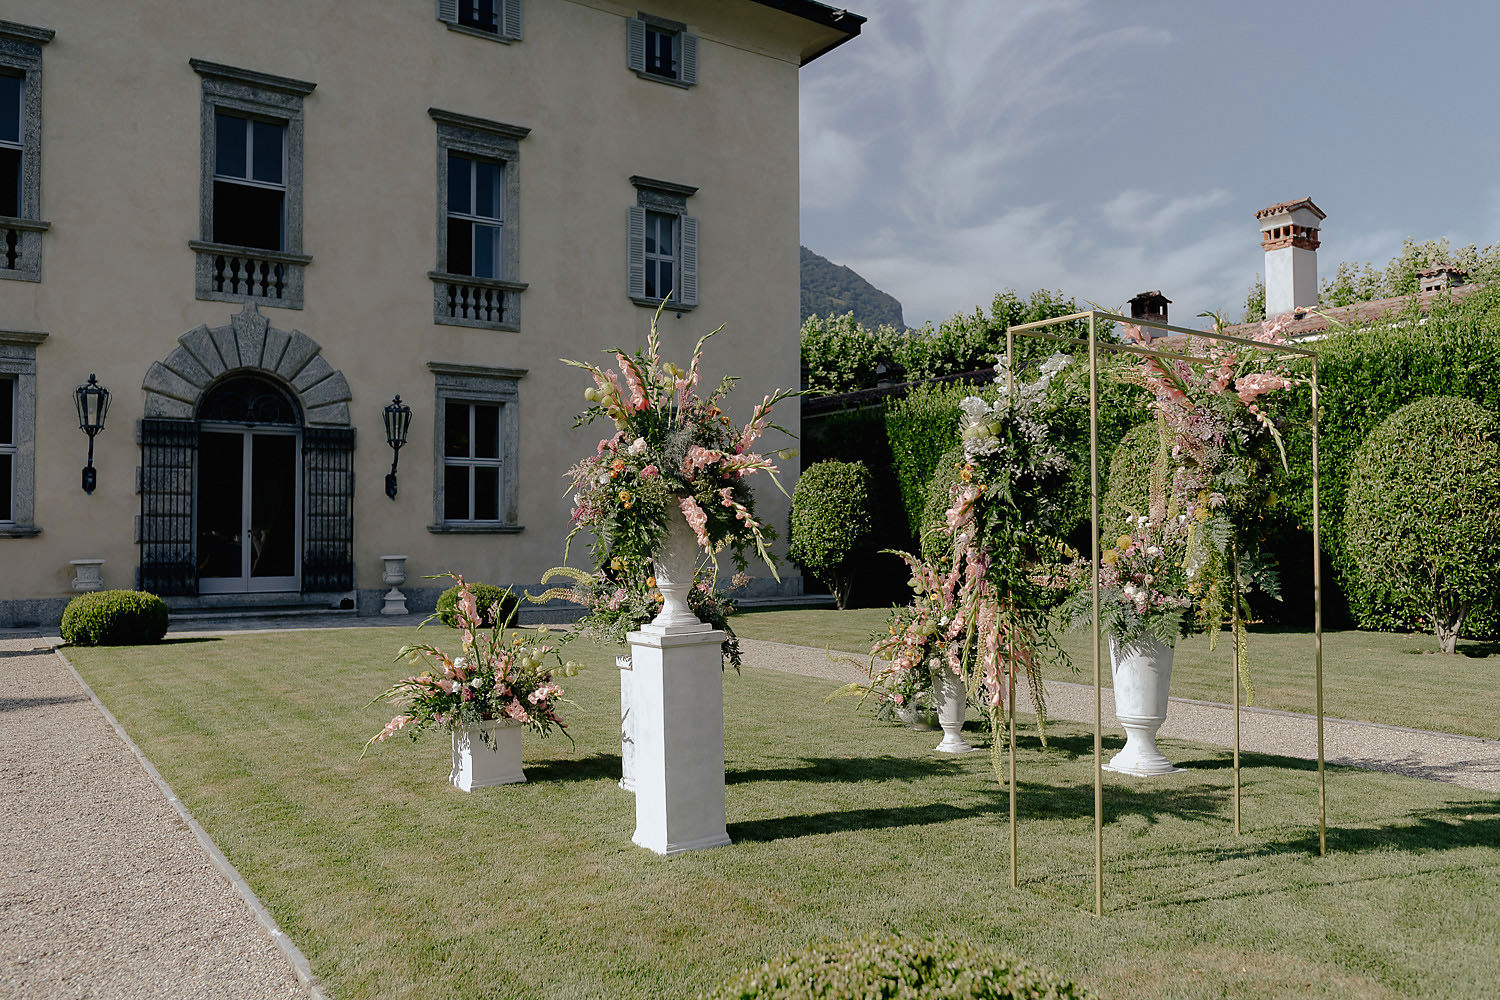 villa balbiano wedding photographer lake como ceremony setting flowers decor